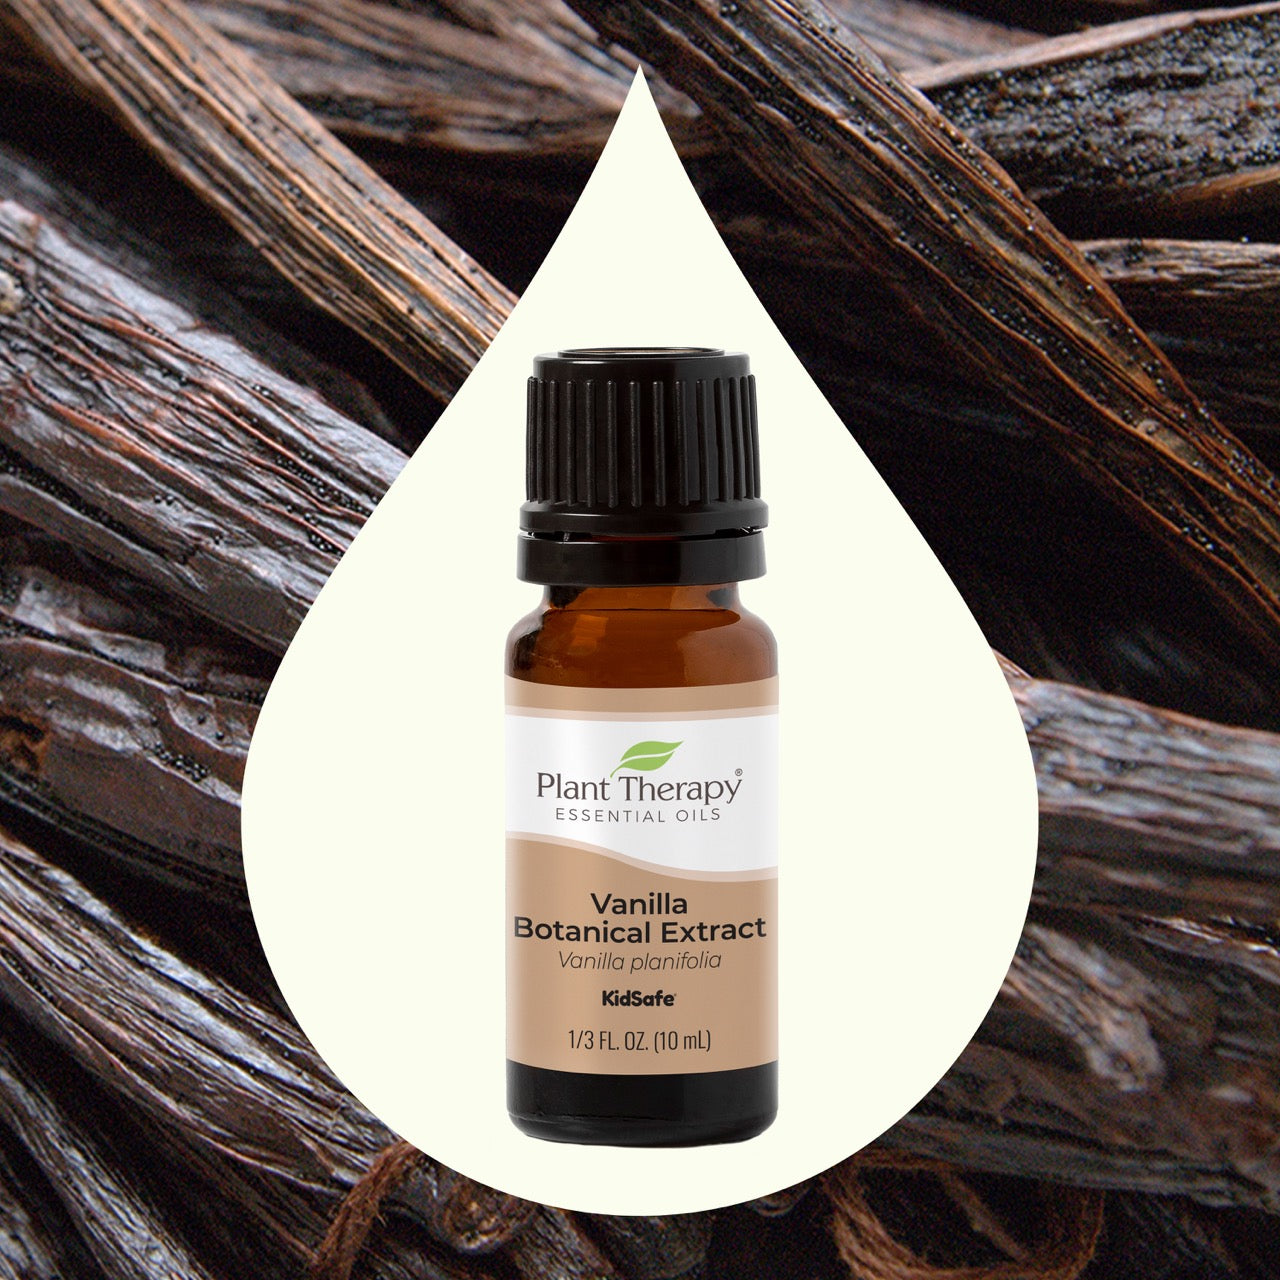 Vanilla Botanical Extract key ingredient image